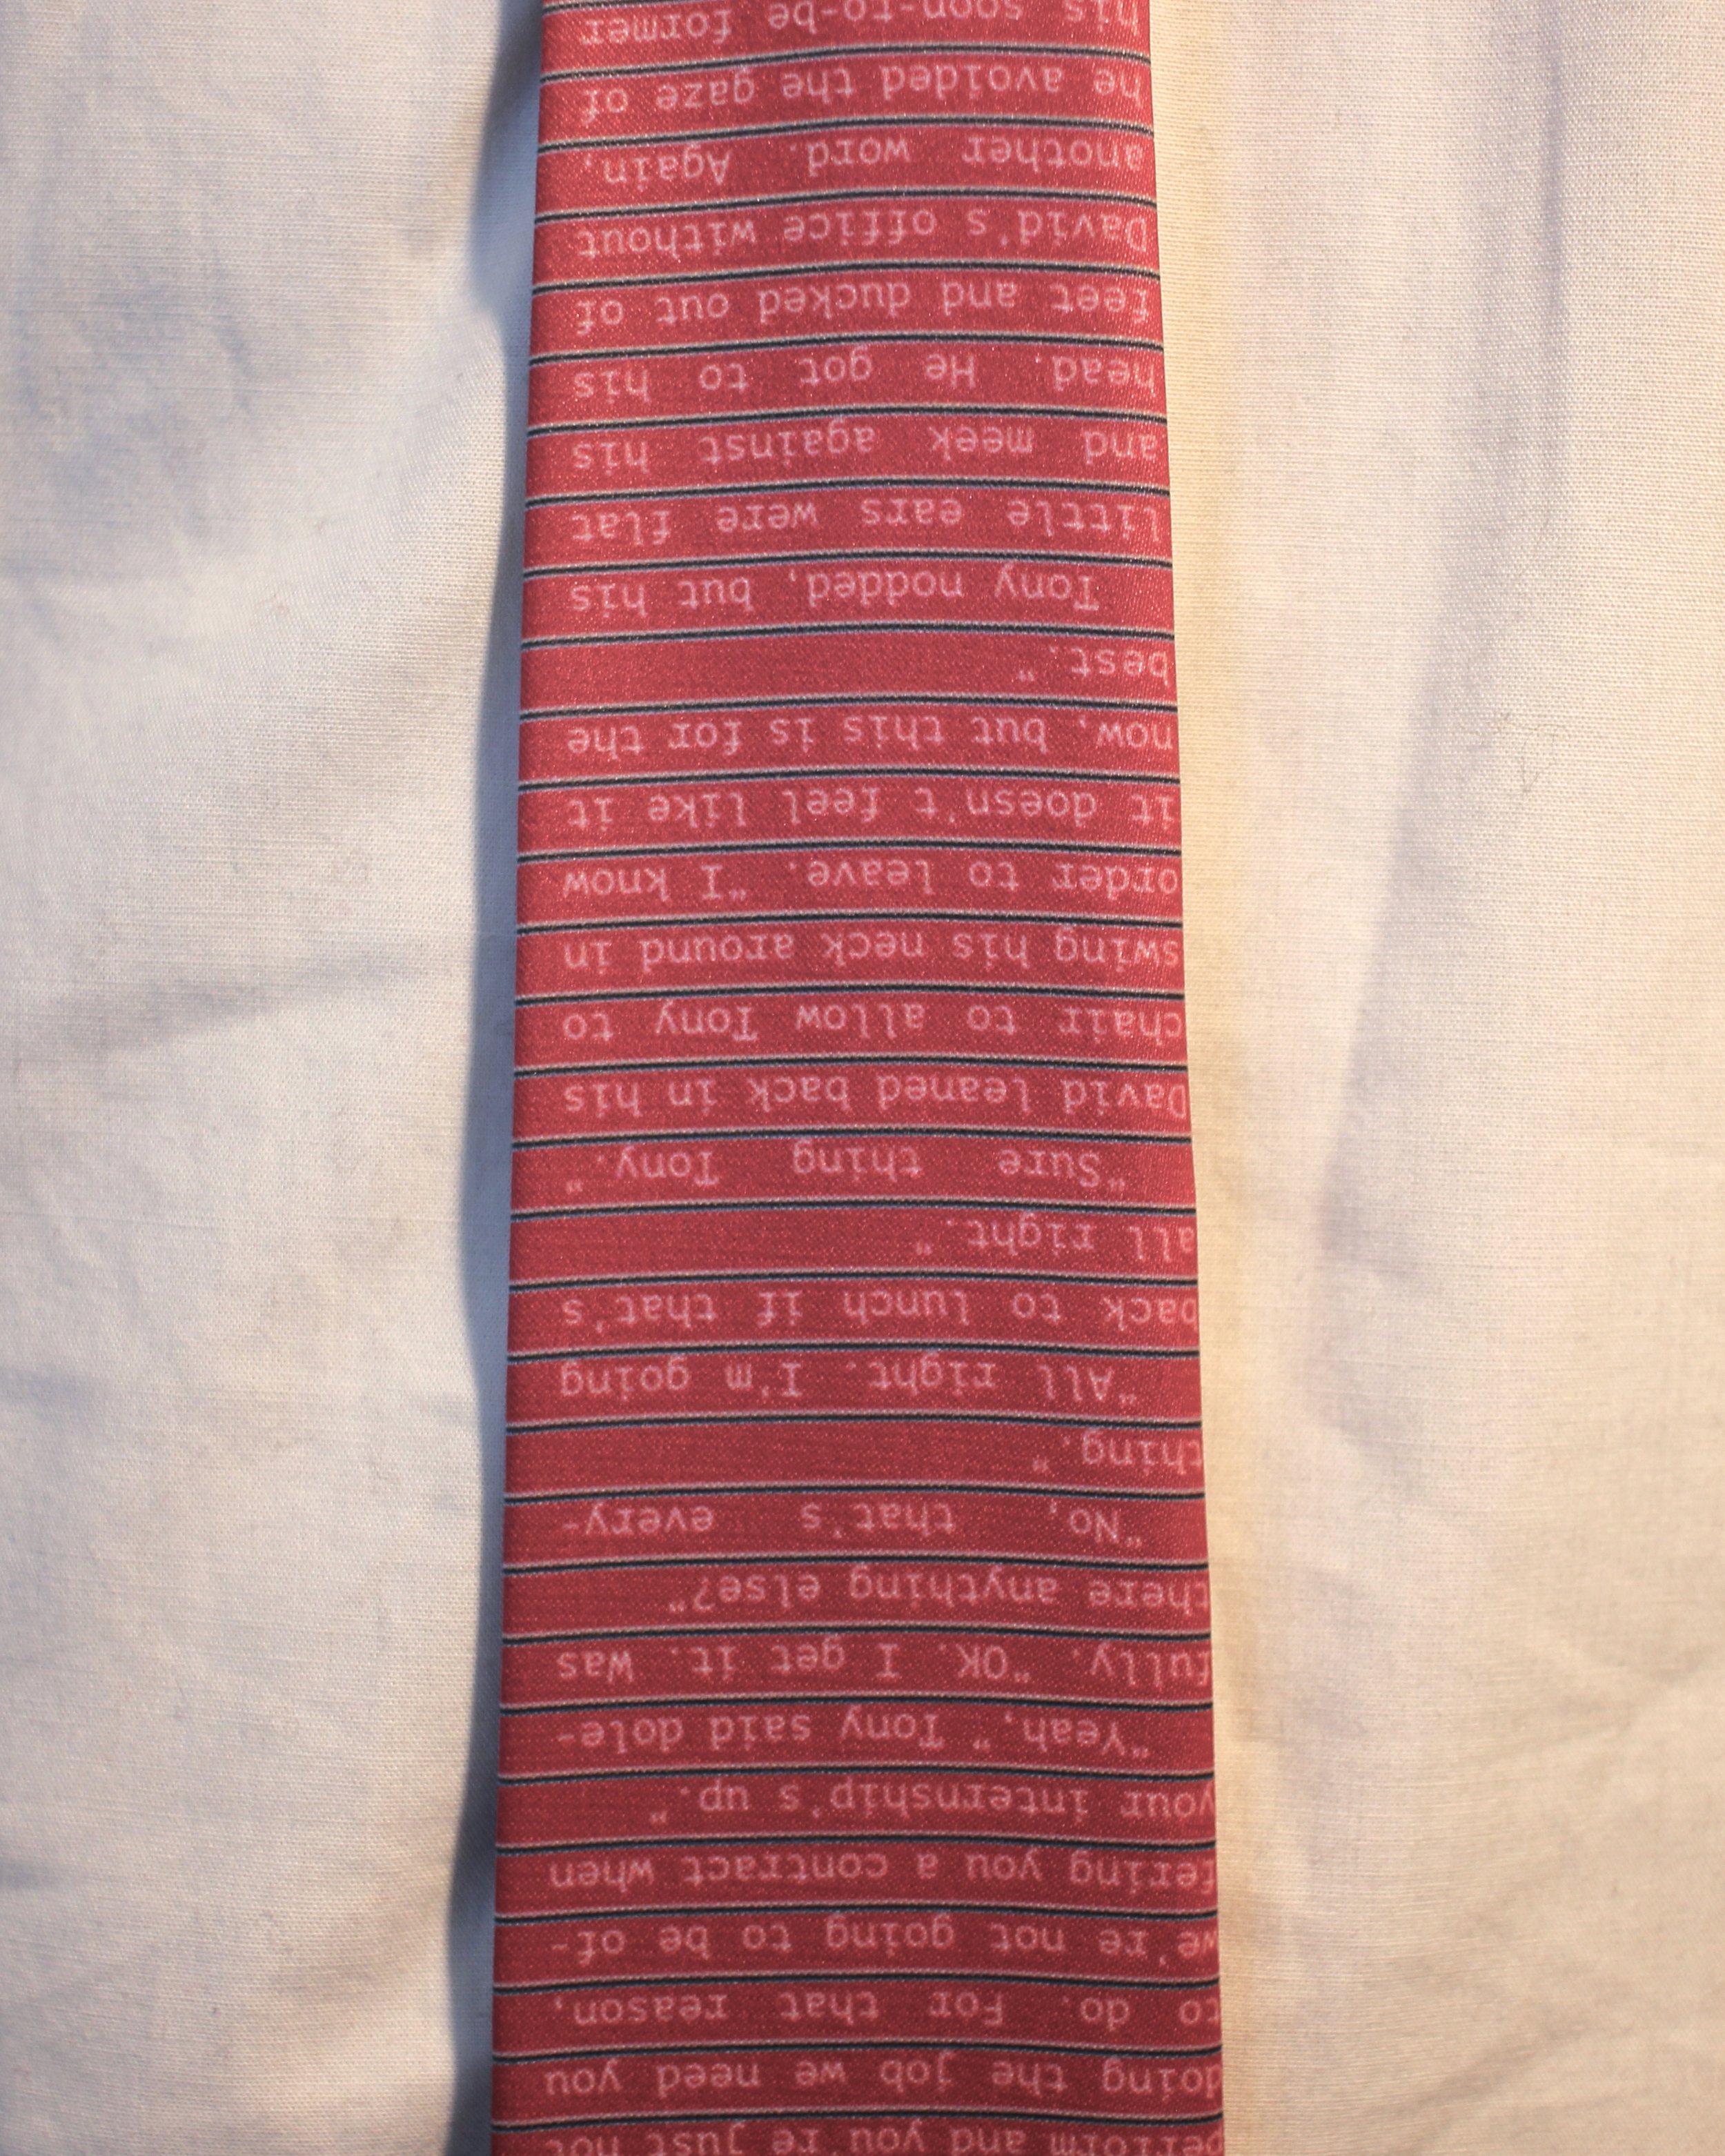 Tie worn by idiot (3)